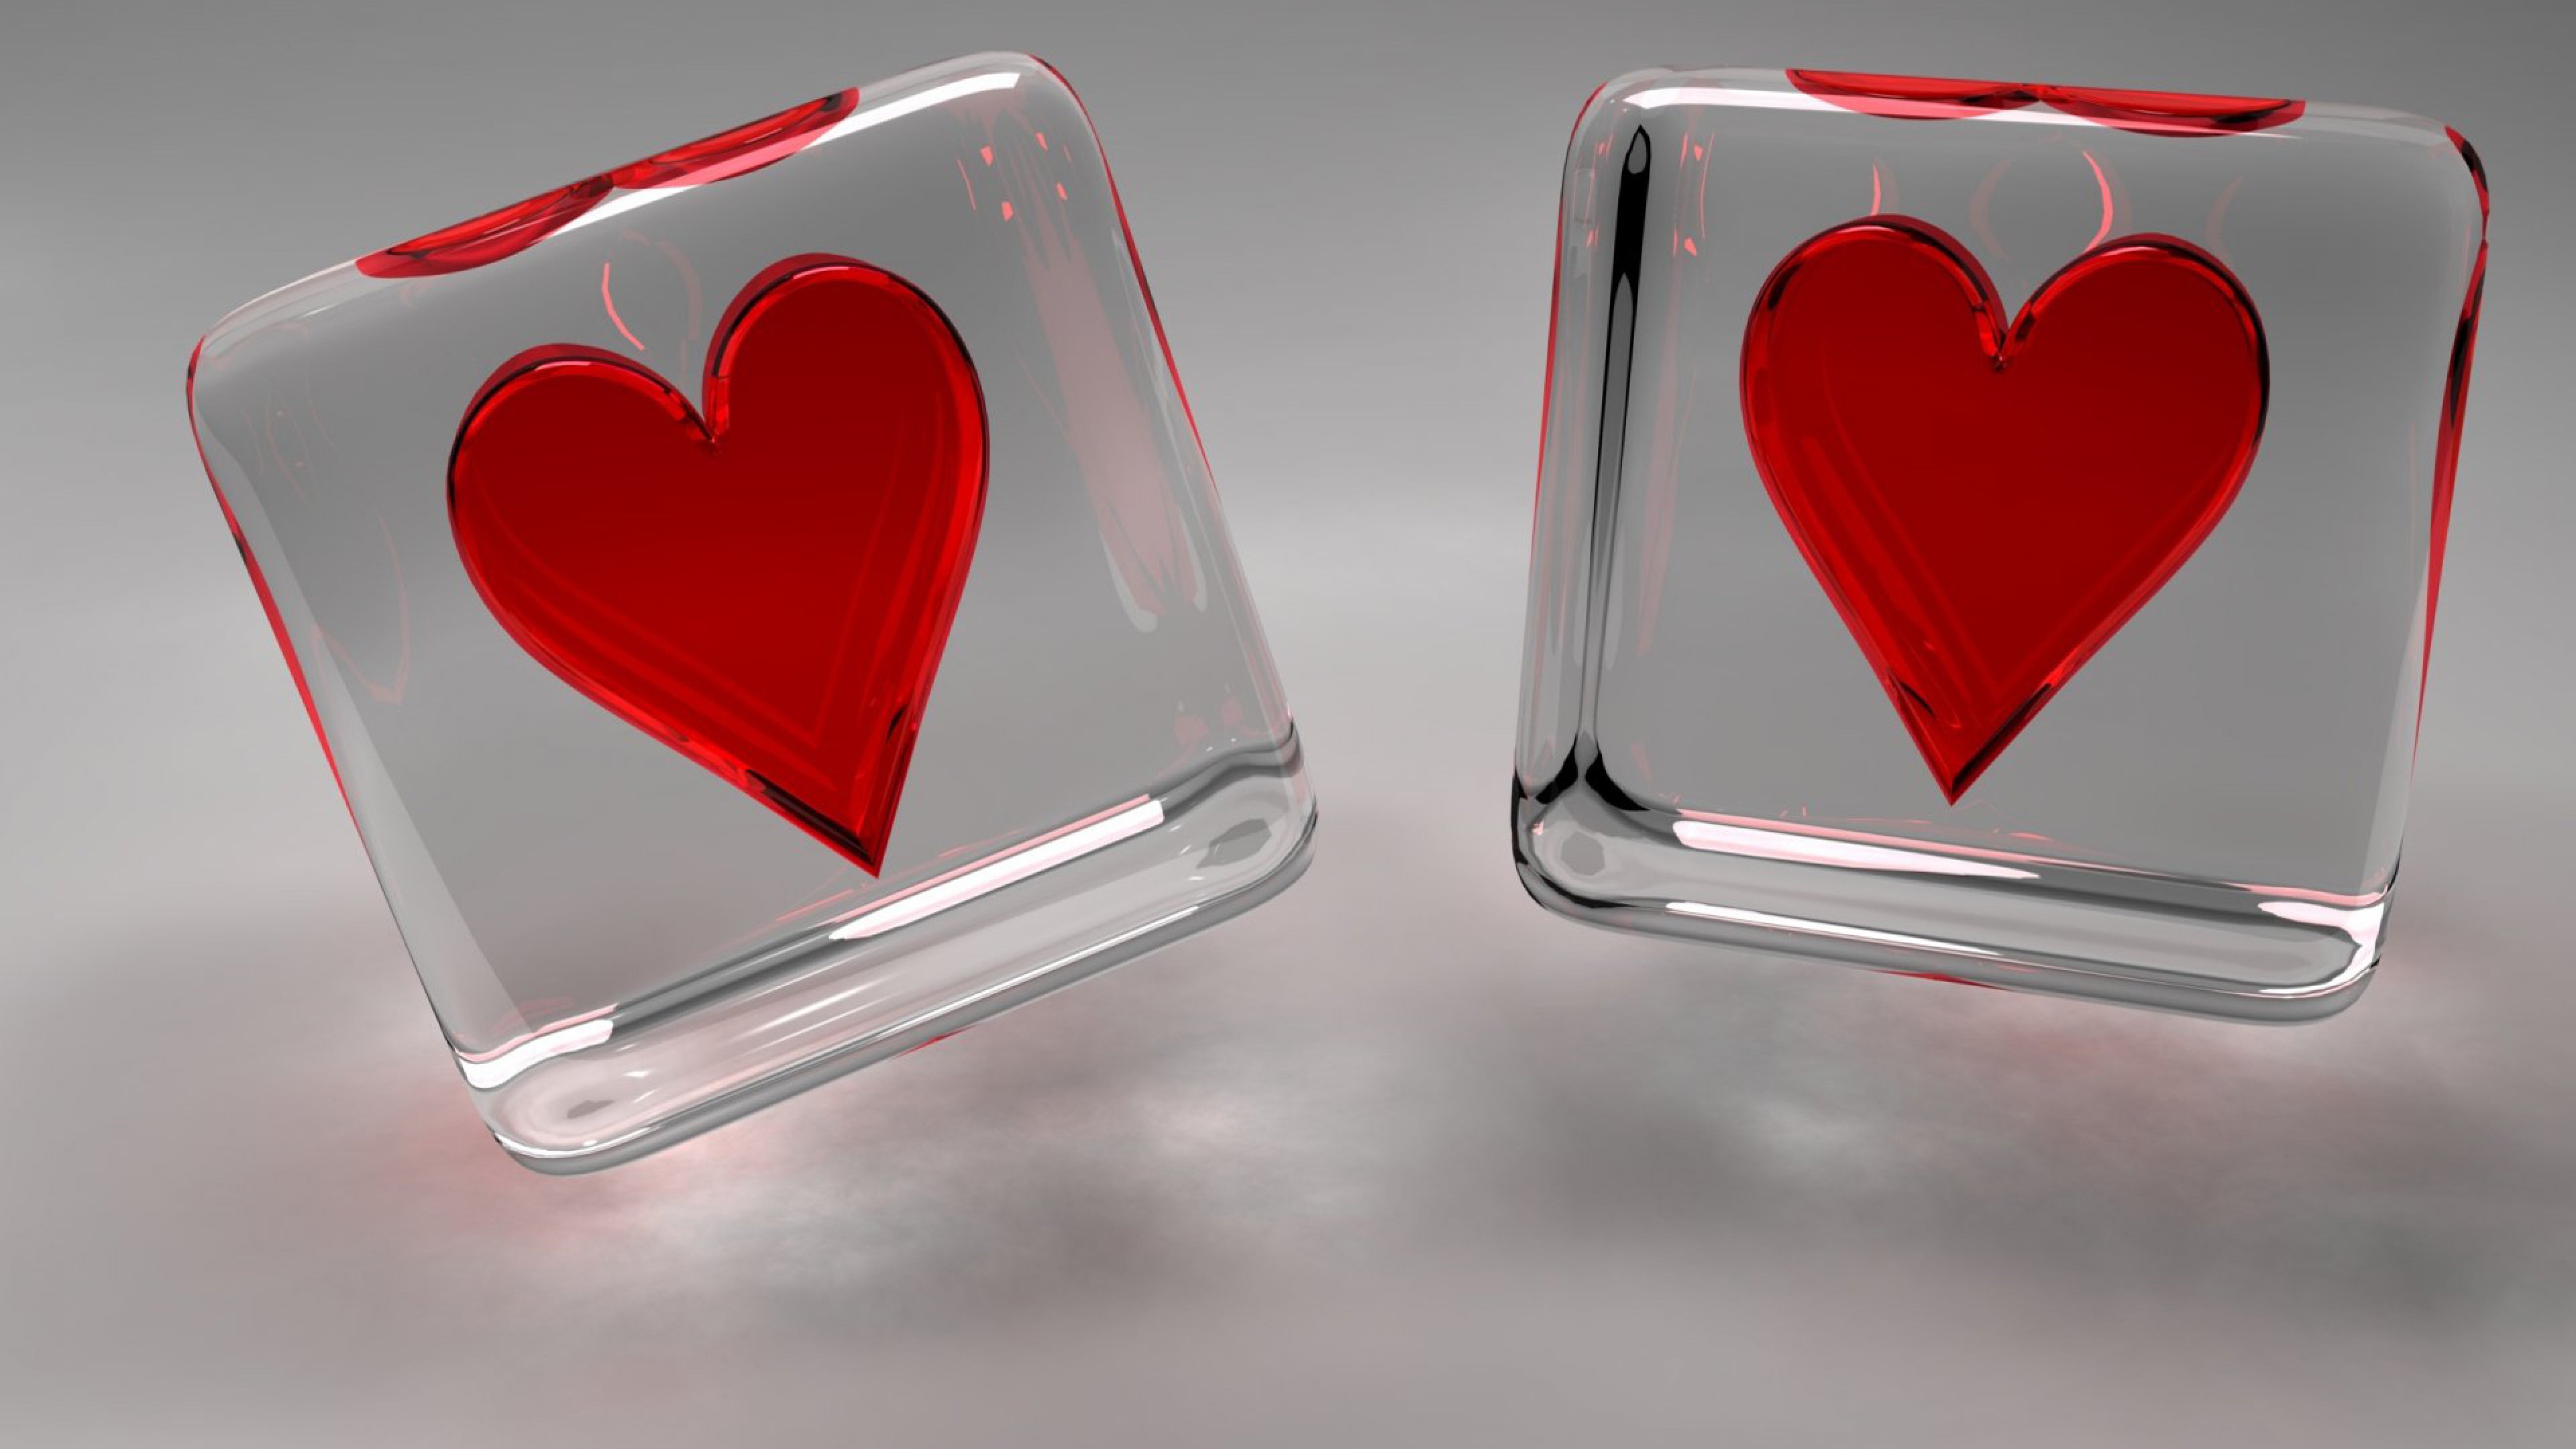 Картинка любимый на телефон. Стеклянное сердце. Сердечки картинки. Красивое стеклянное сердце. Картинки на рабочий стол сердечки.